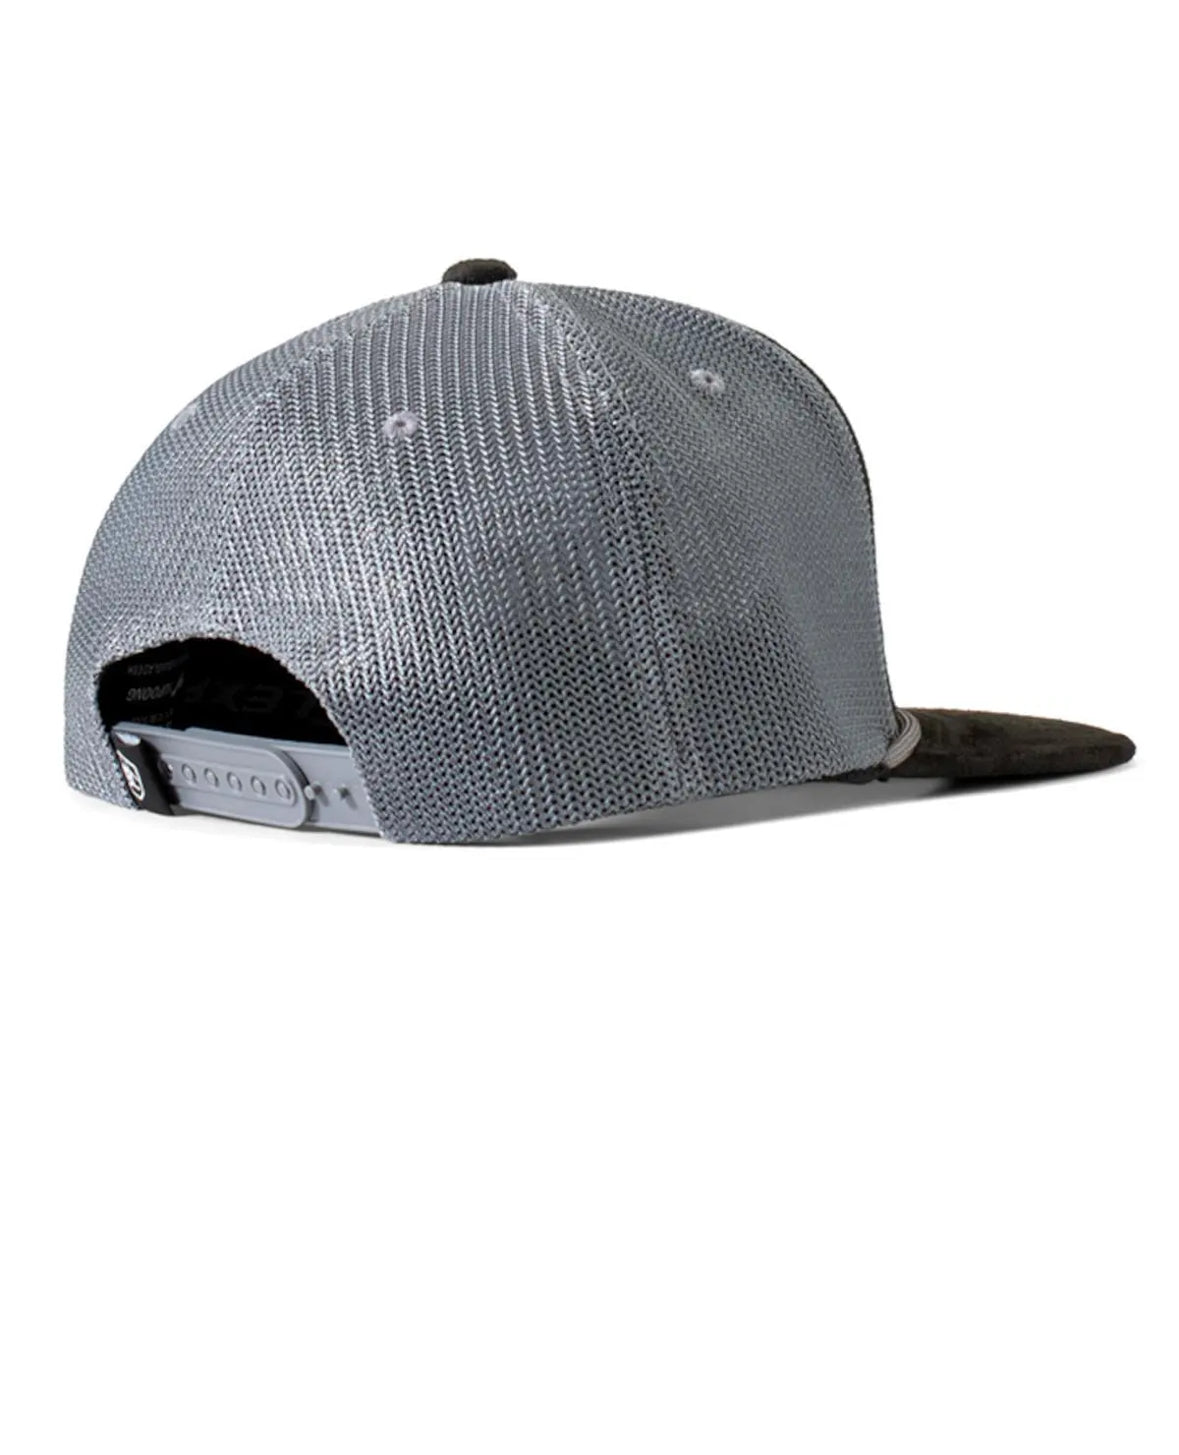 Ariat Western Cap Baseball Hat Mesh Snapback Logo Stitch Black